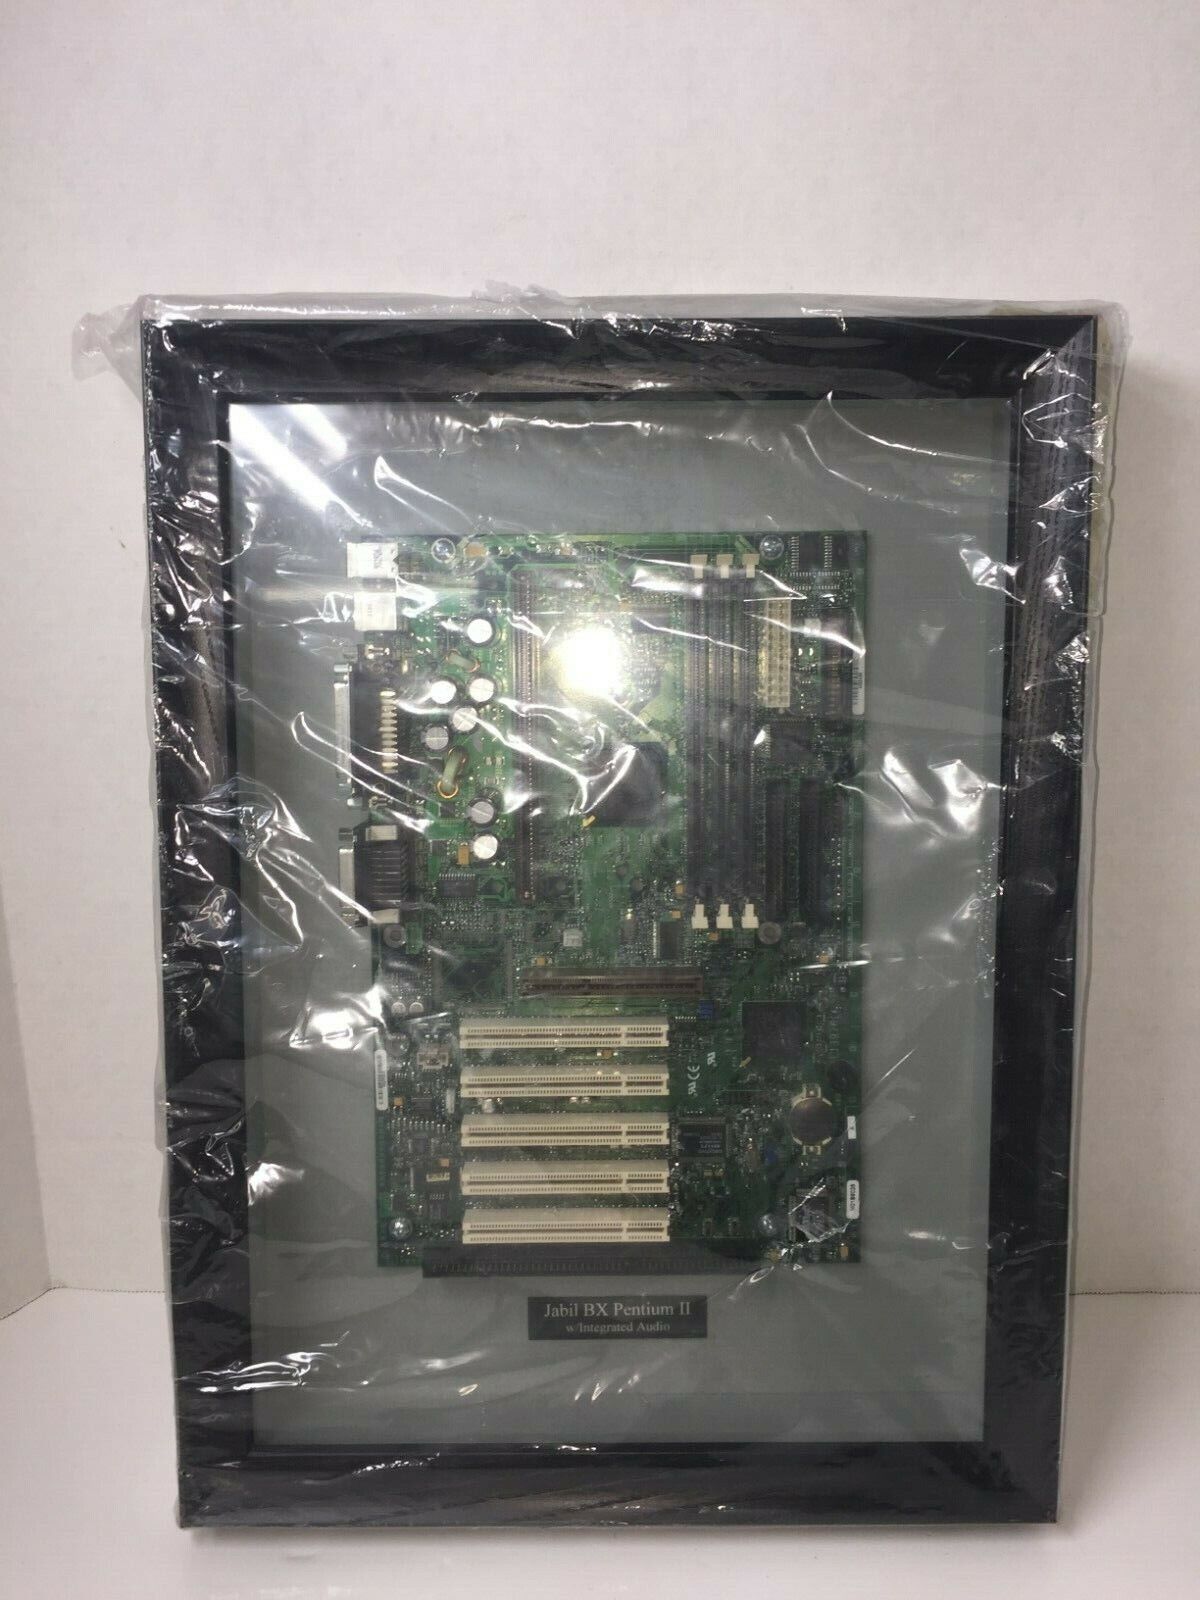 Jabil Tabor Pentium II BX Motherboard w/ Hardware Management Framed Glass Intel